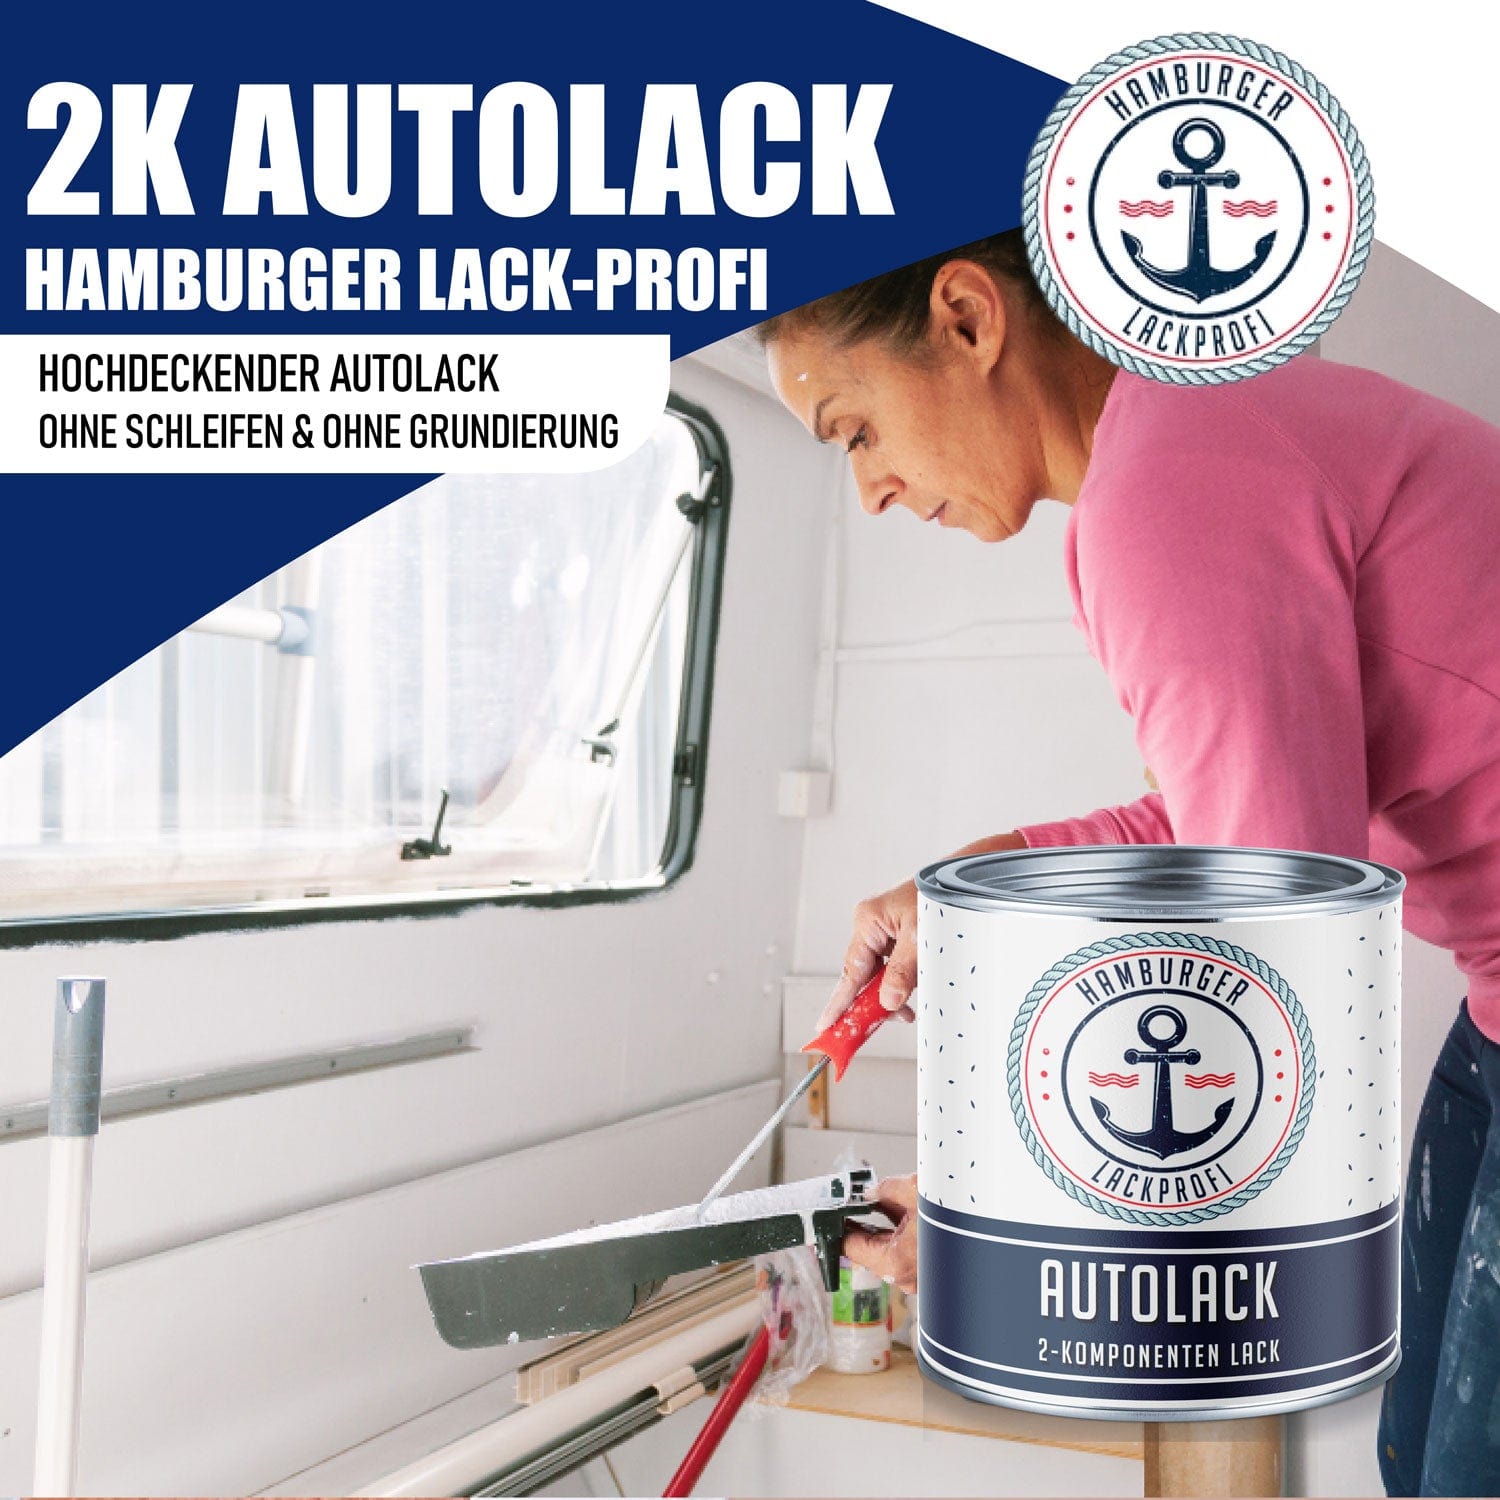 Hamburger Lack-Profi Lacke & Beschichtungen Hamburger Lack-Profi 2K Autolack in Schokoladenbraun RAL 8017 mit Lackierset (X300) & Verdünnung (1 L) - 30% Sparangebot